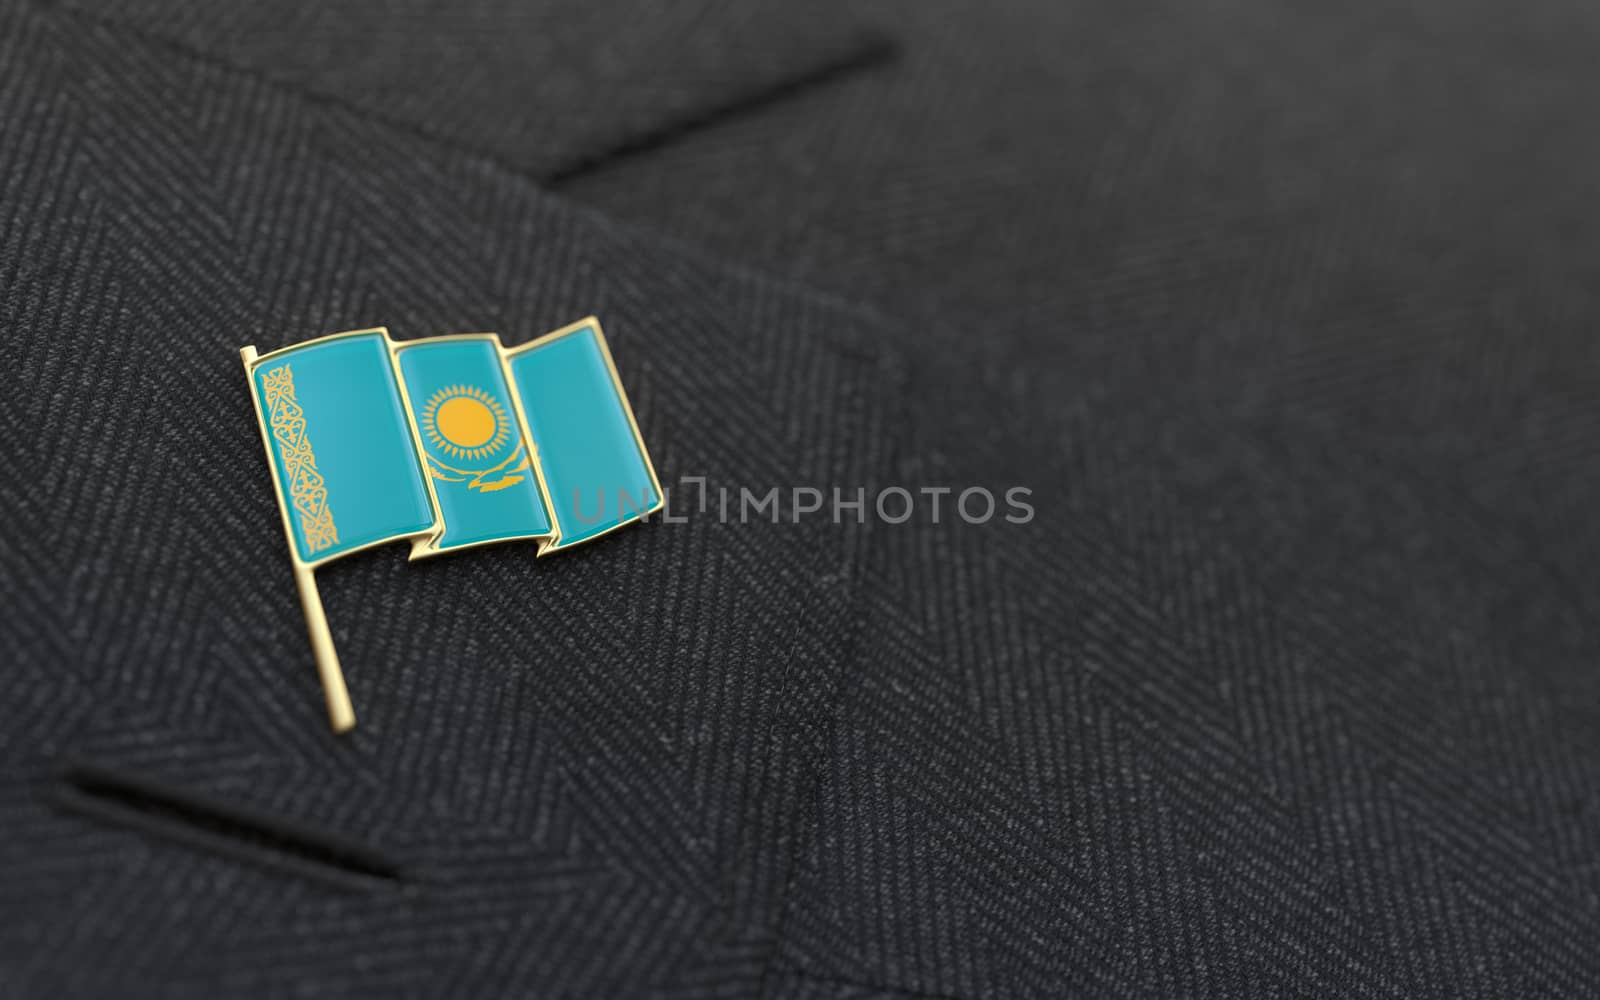 Kazakhstan flag lapel pin on the collar of a business suit jacket shows patriotism